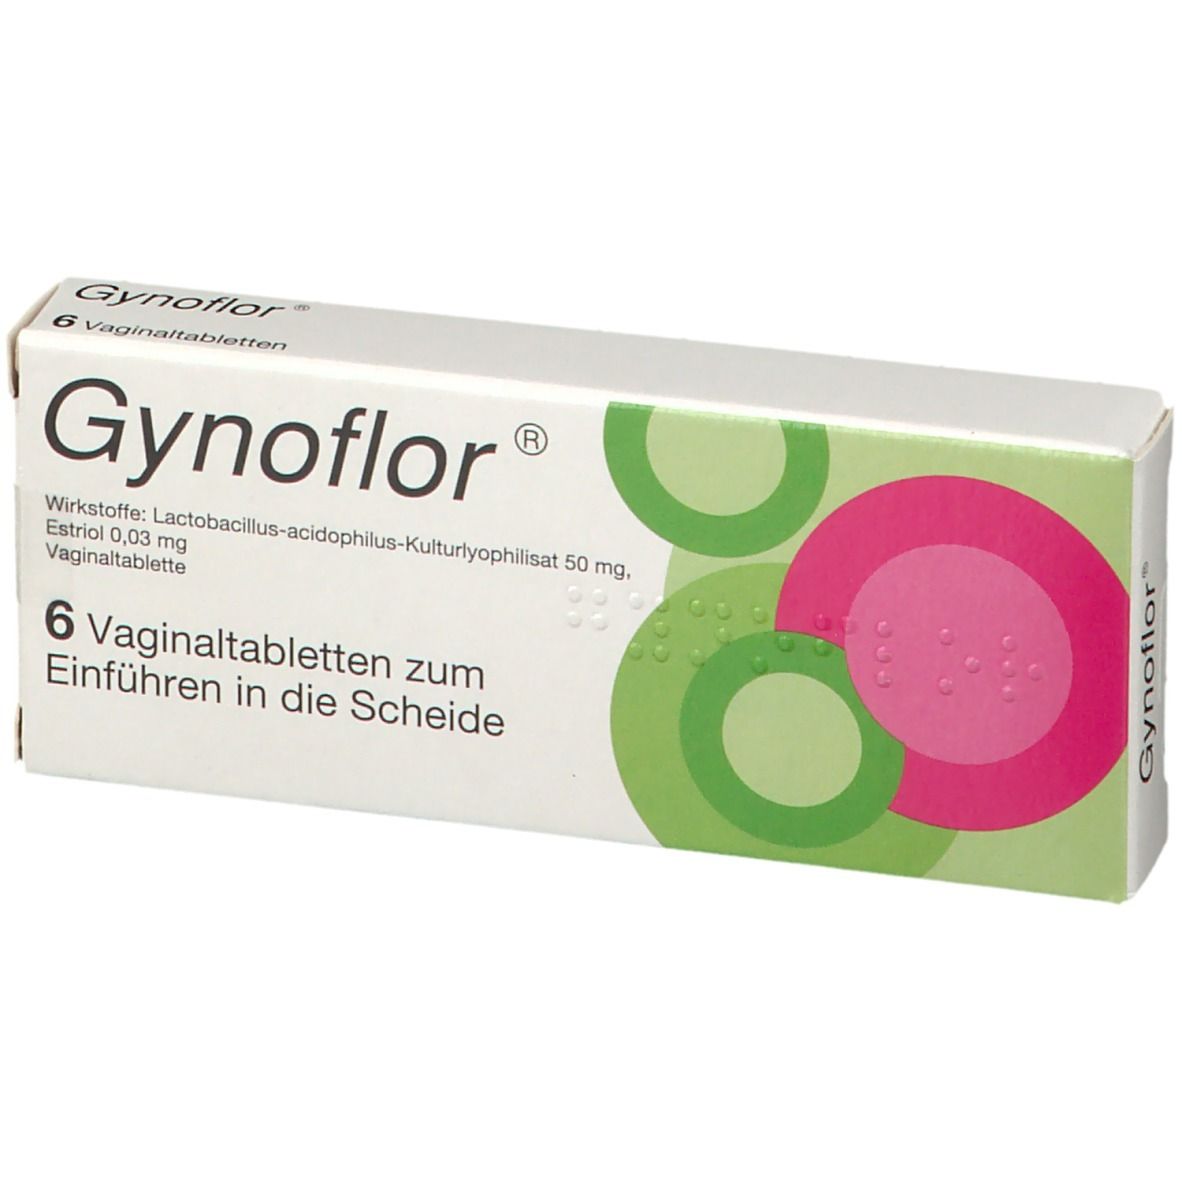 Gynoflor ®.